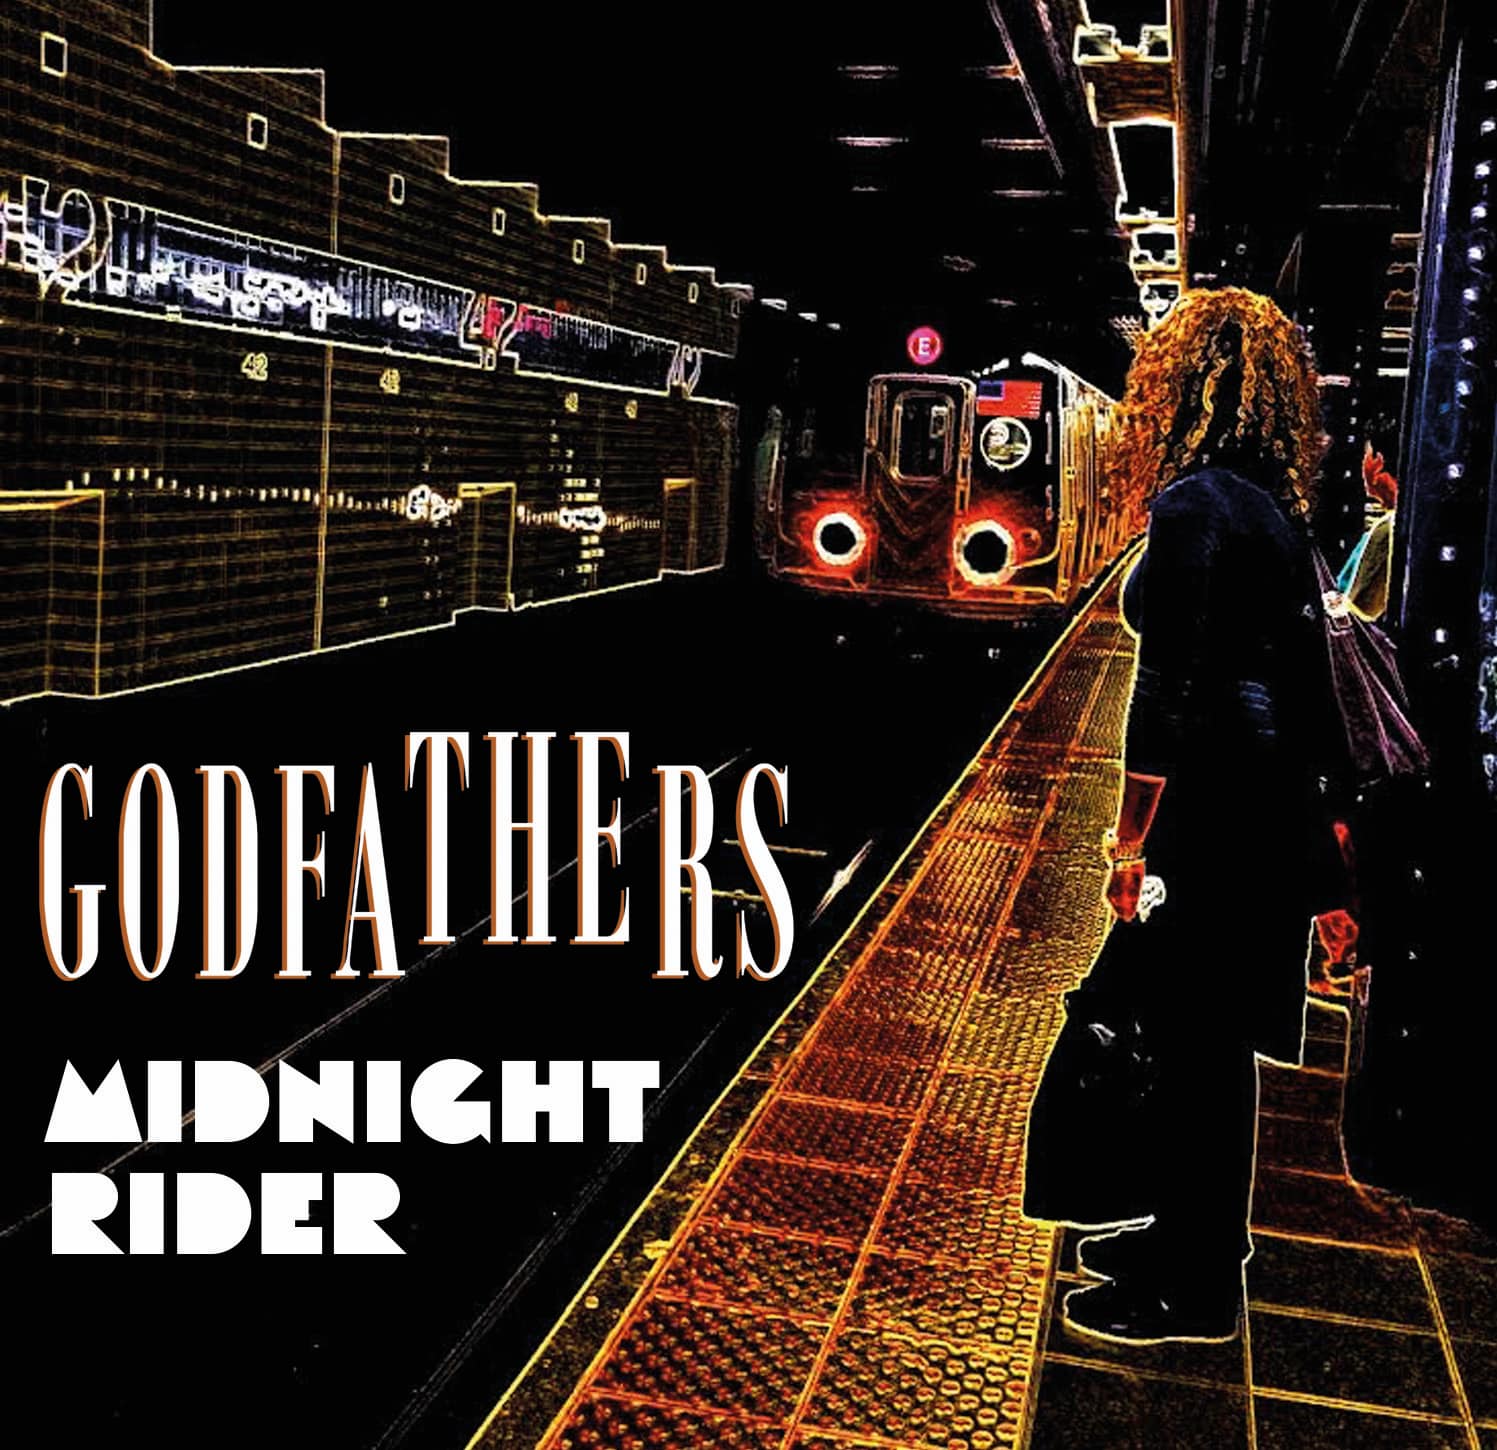 The Godfathers - Midnight Rider